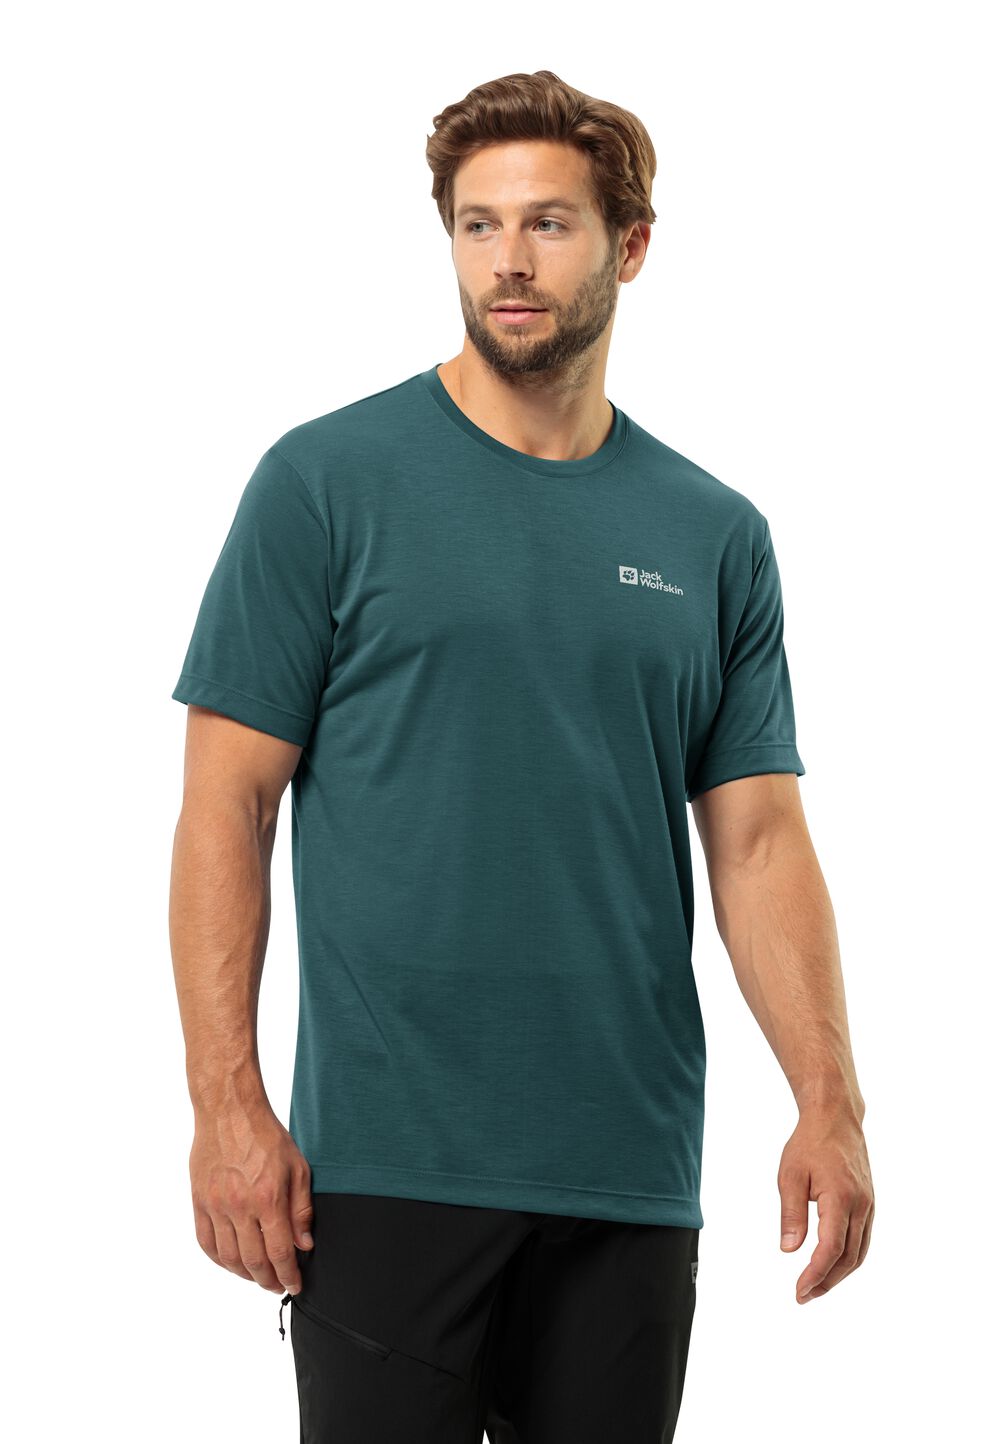 Jack Wolfskin Vonnan S S T-Shirt Men Functioneel shirt Heren XL emerald